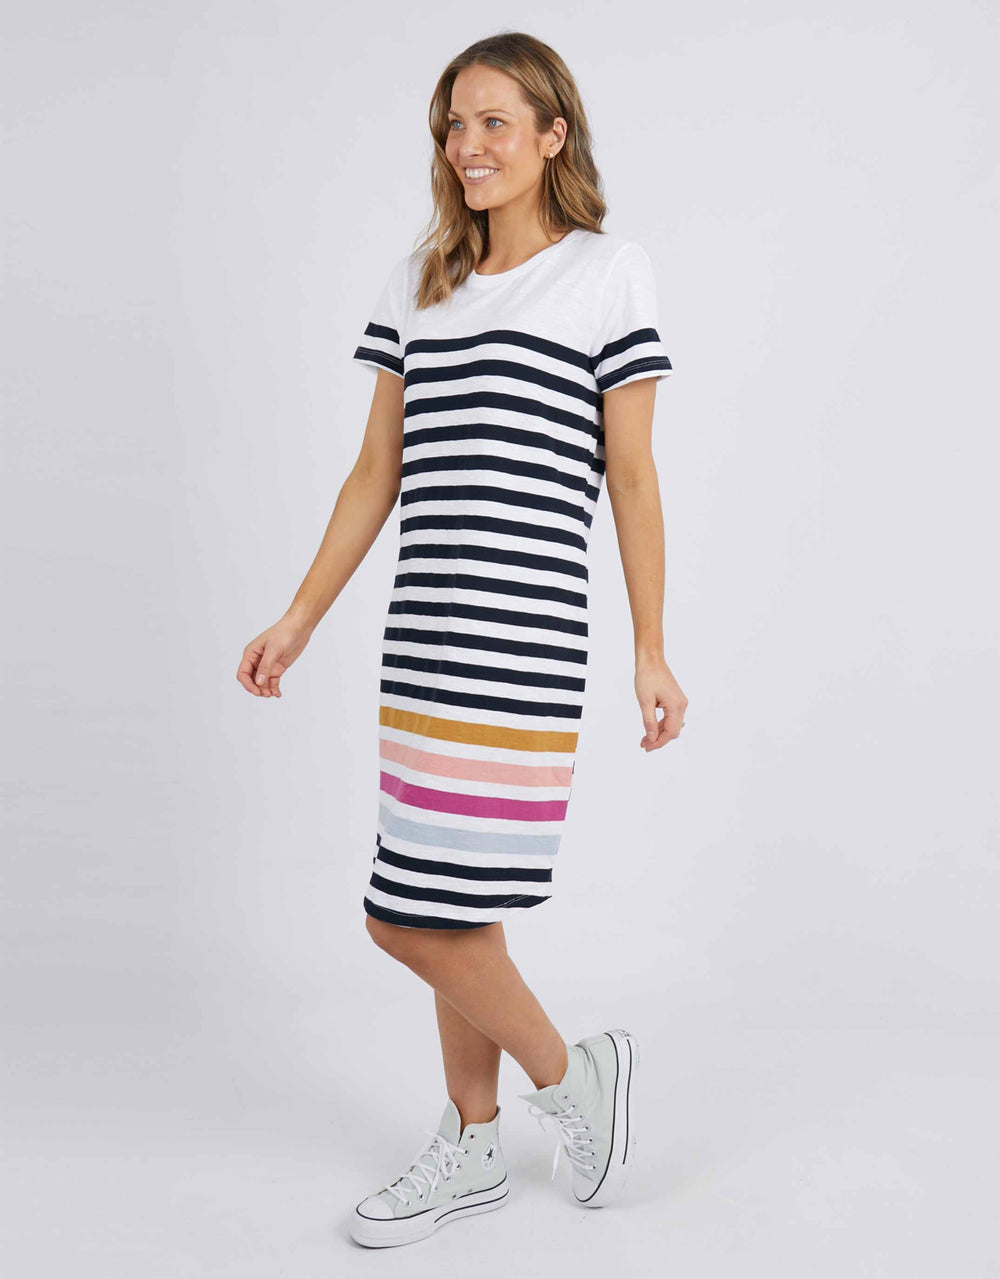 White & Co | Elm Clothimg | A Head Of Time Dress - Navy/White Stripe